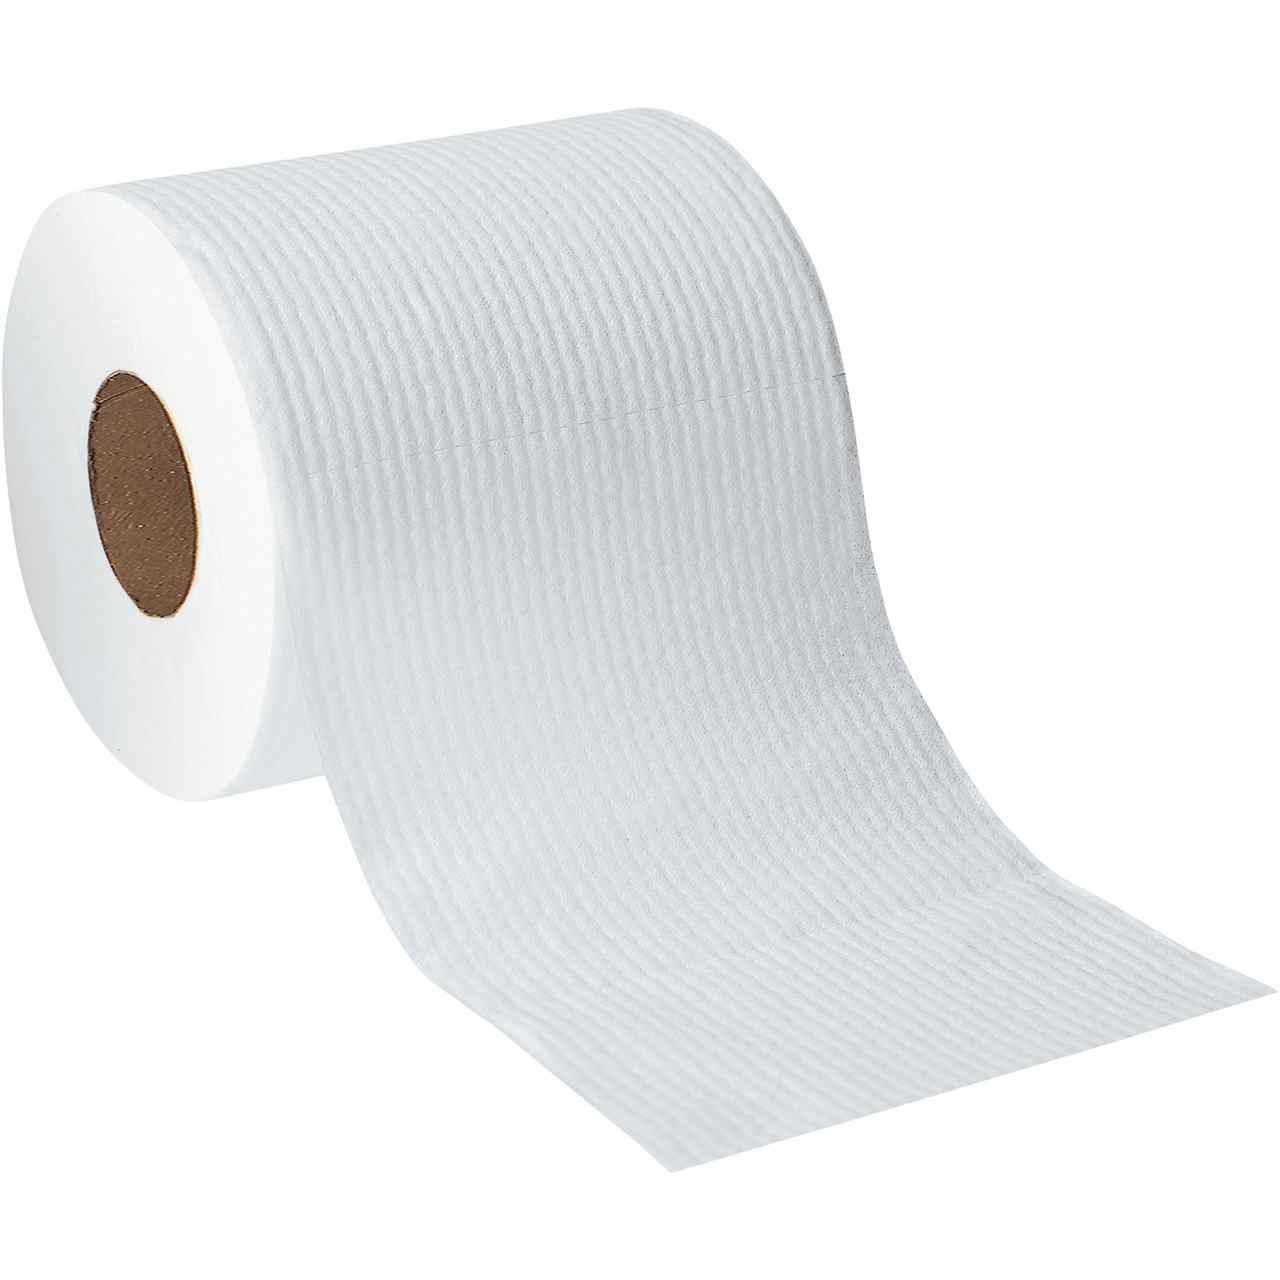 Cottonelle Premium Toilet Paper